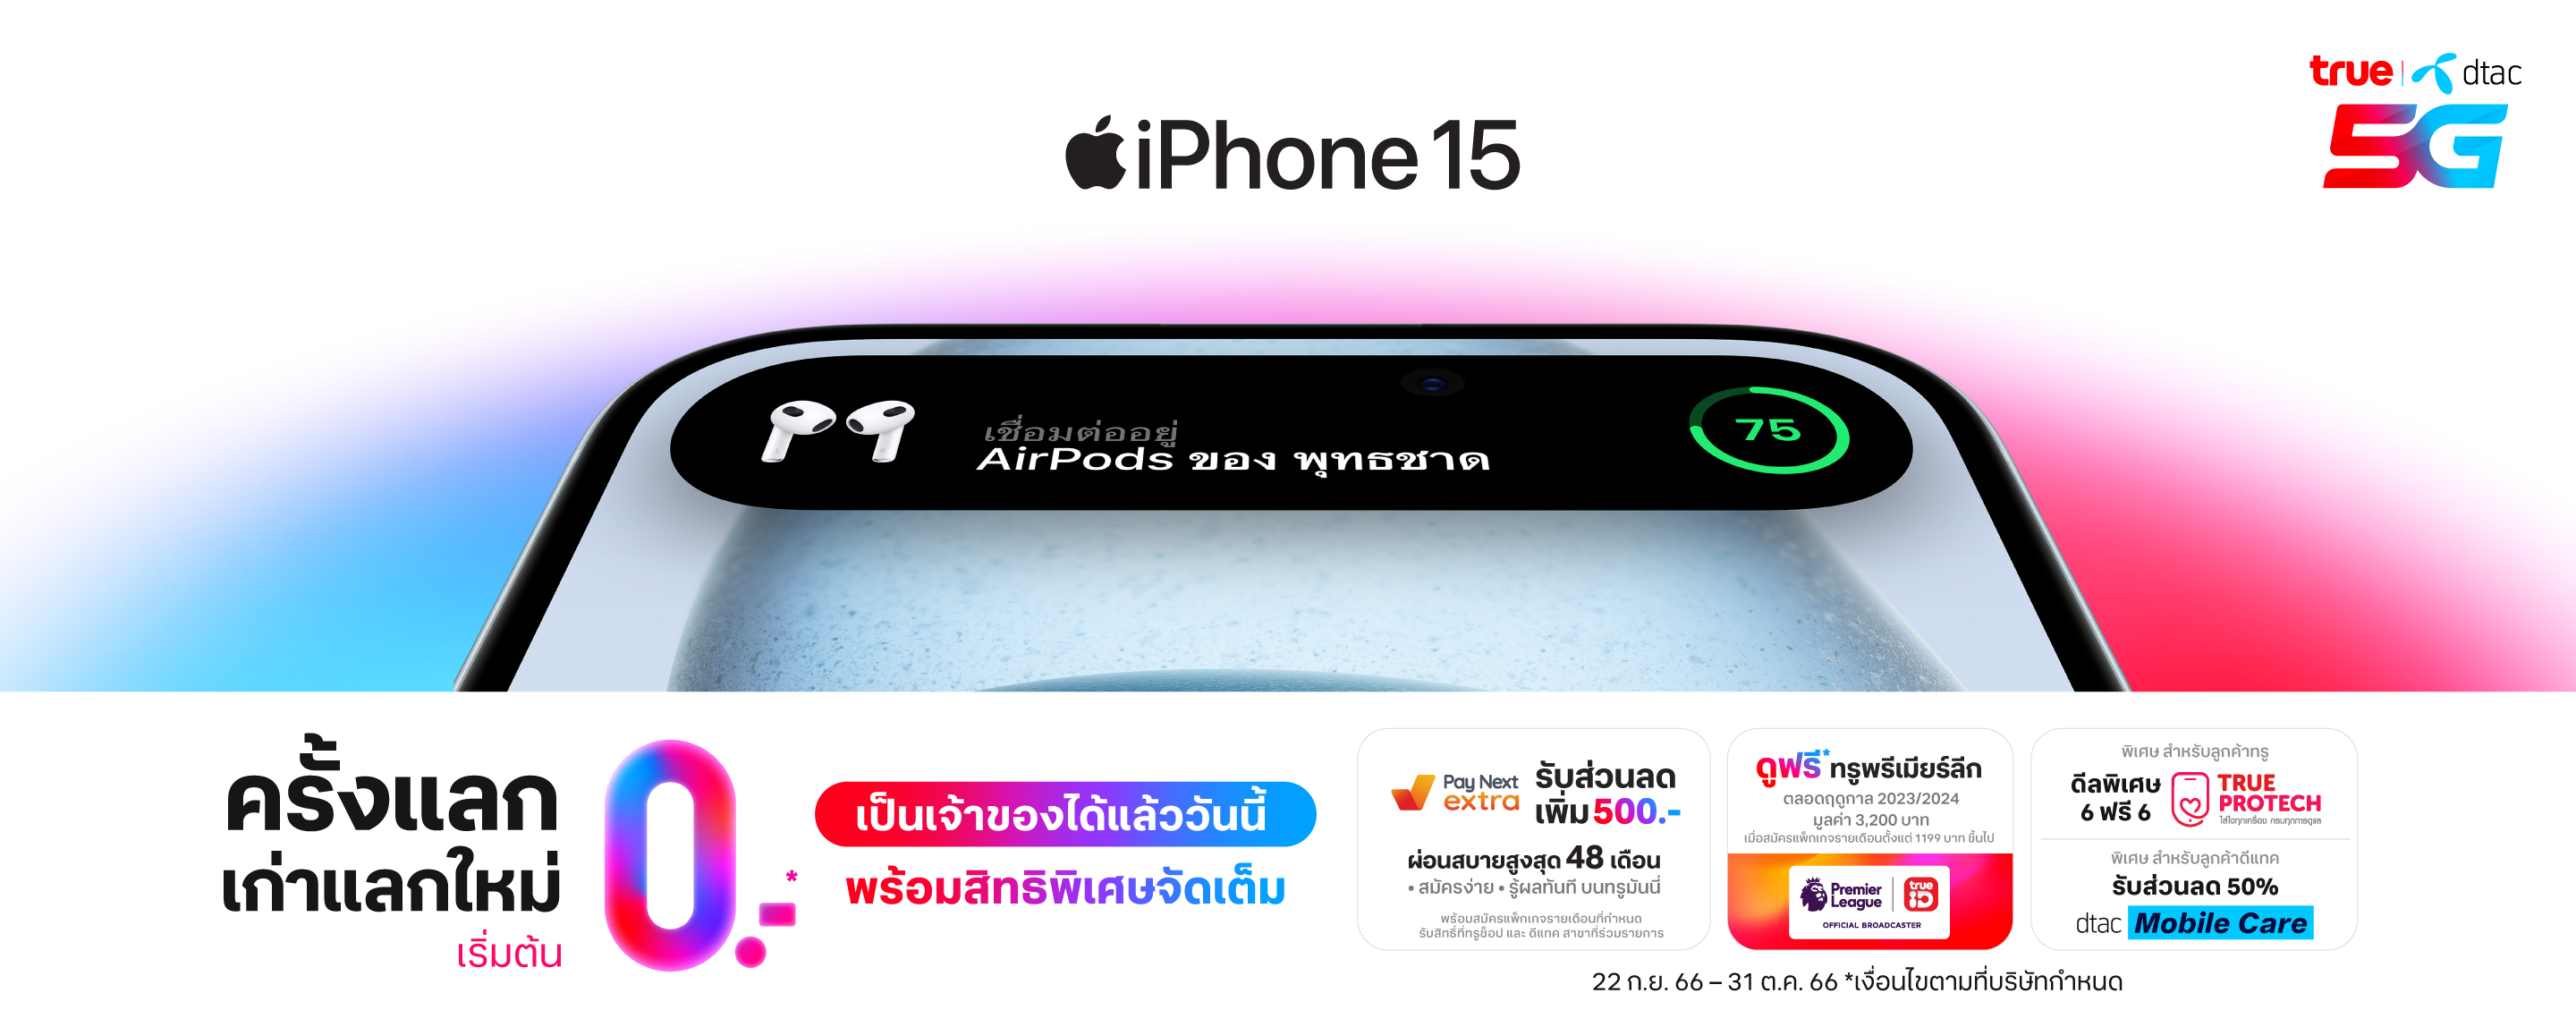 iPhone 15 coming soon